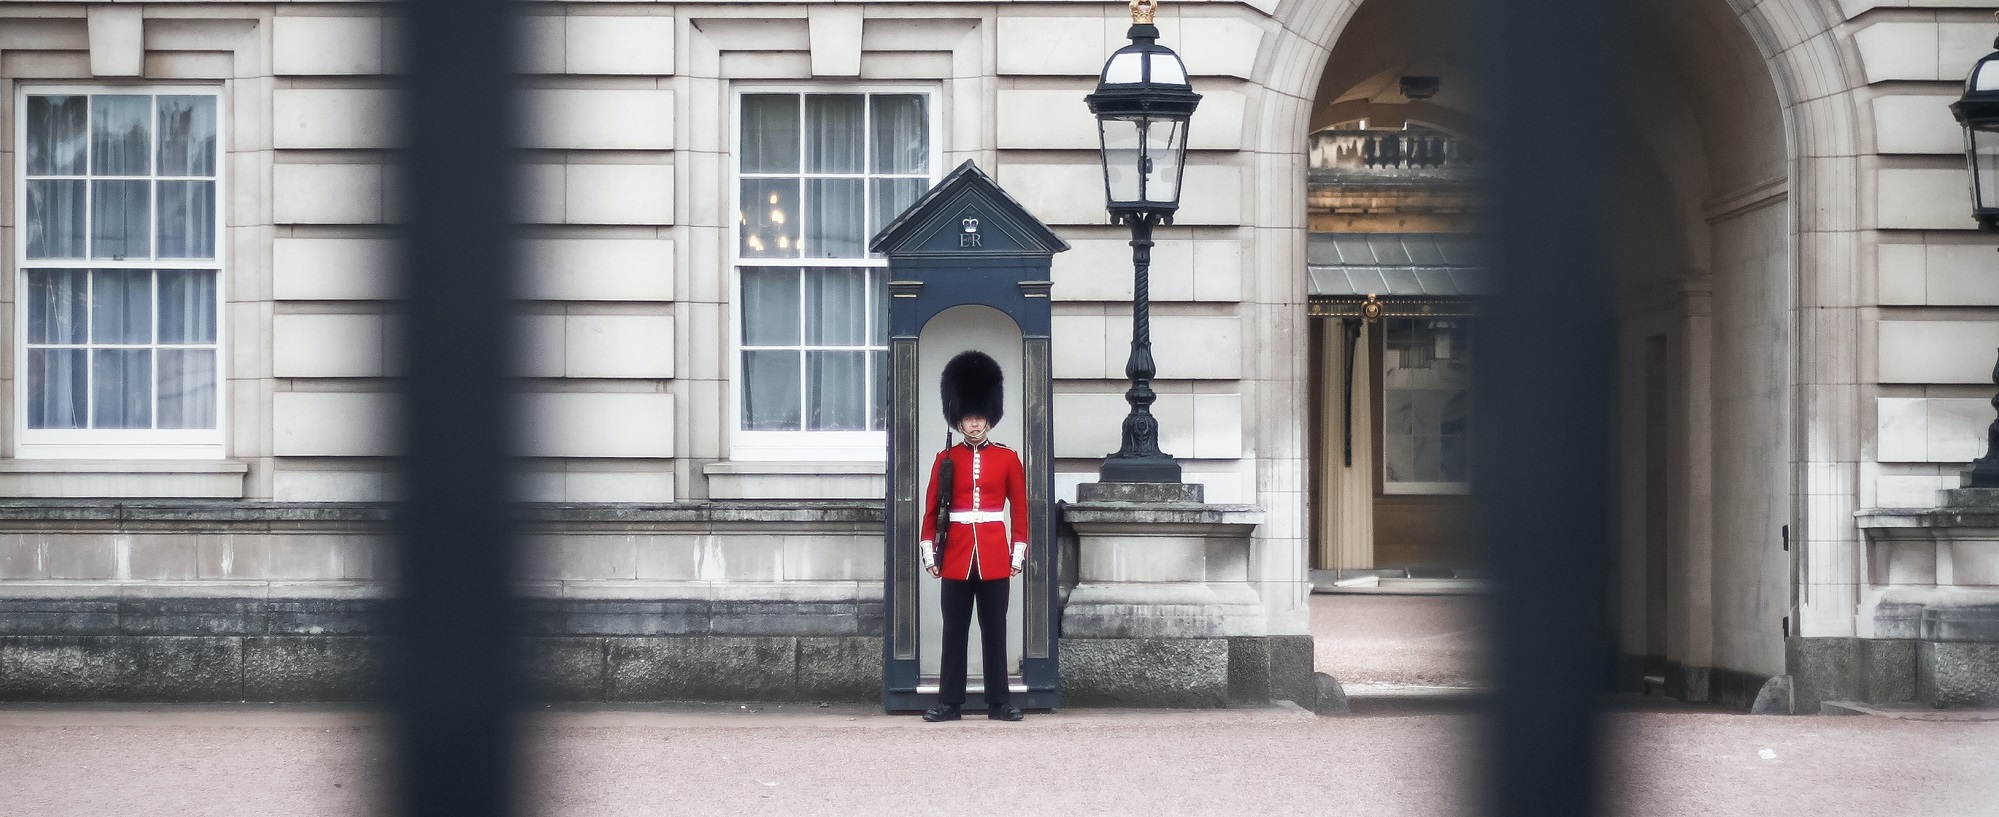 Kings guard stood outside Buckingham Palace 